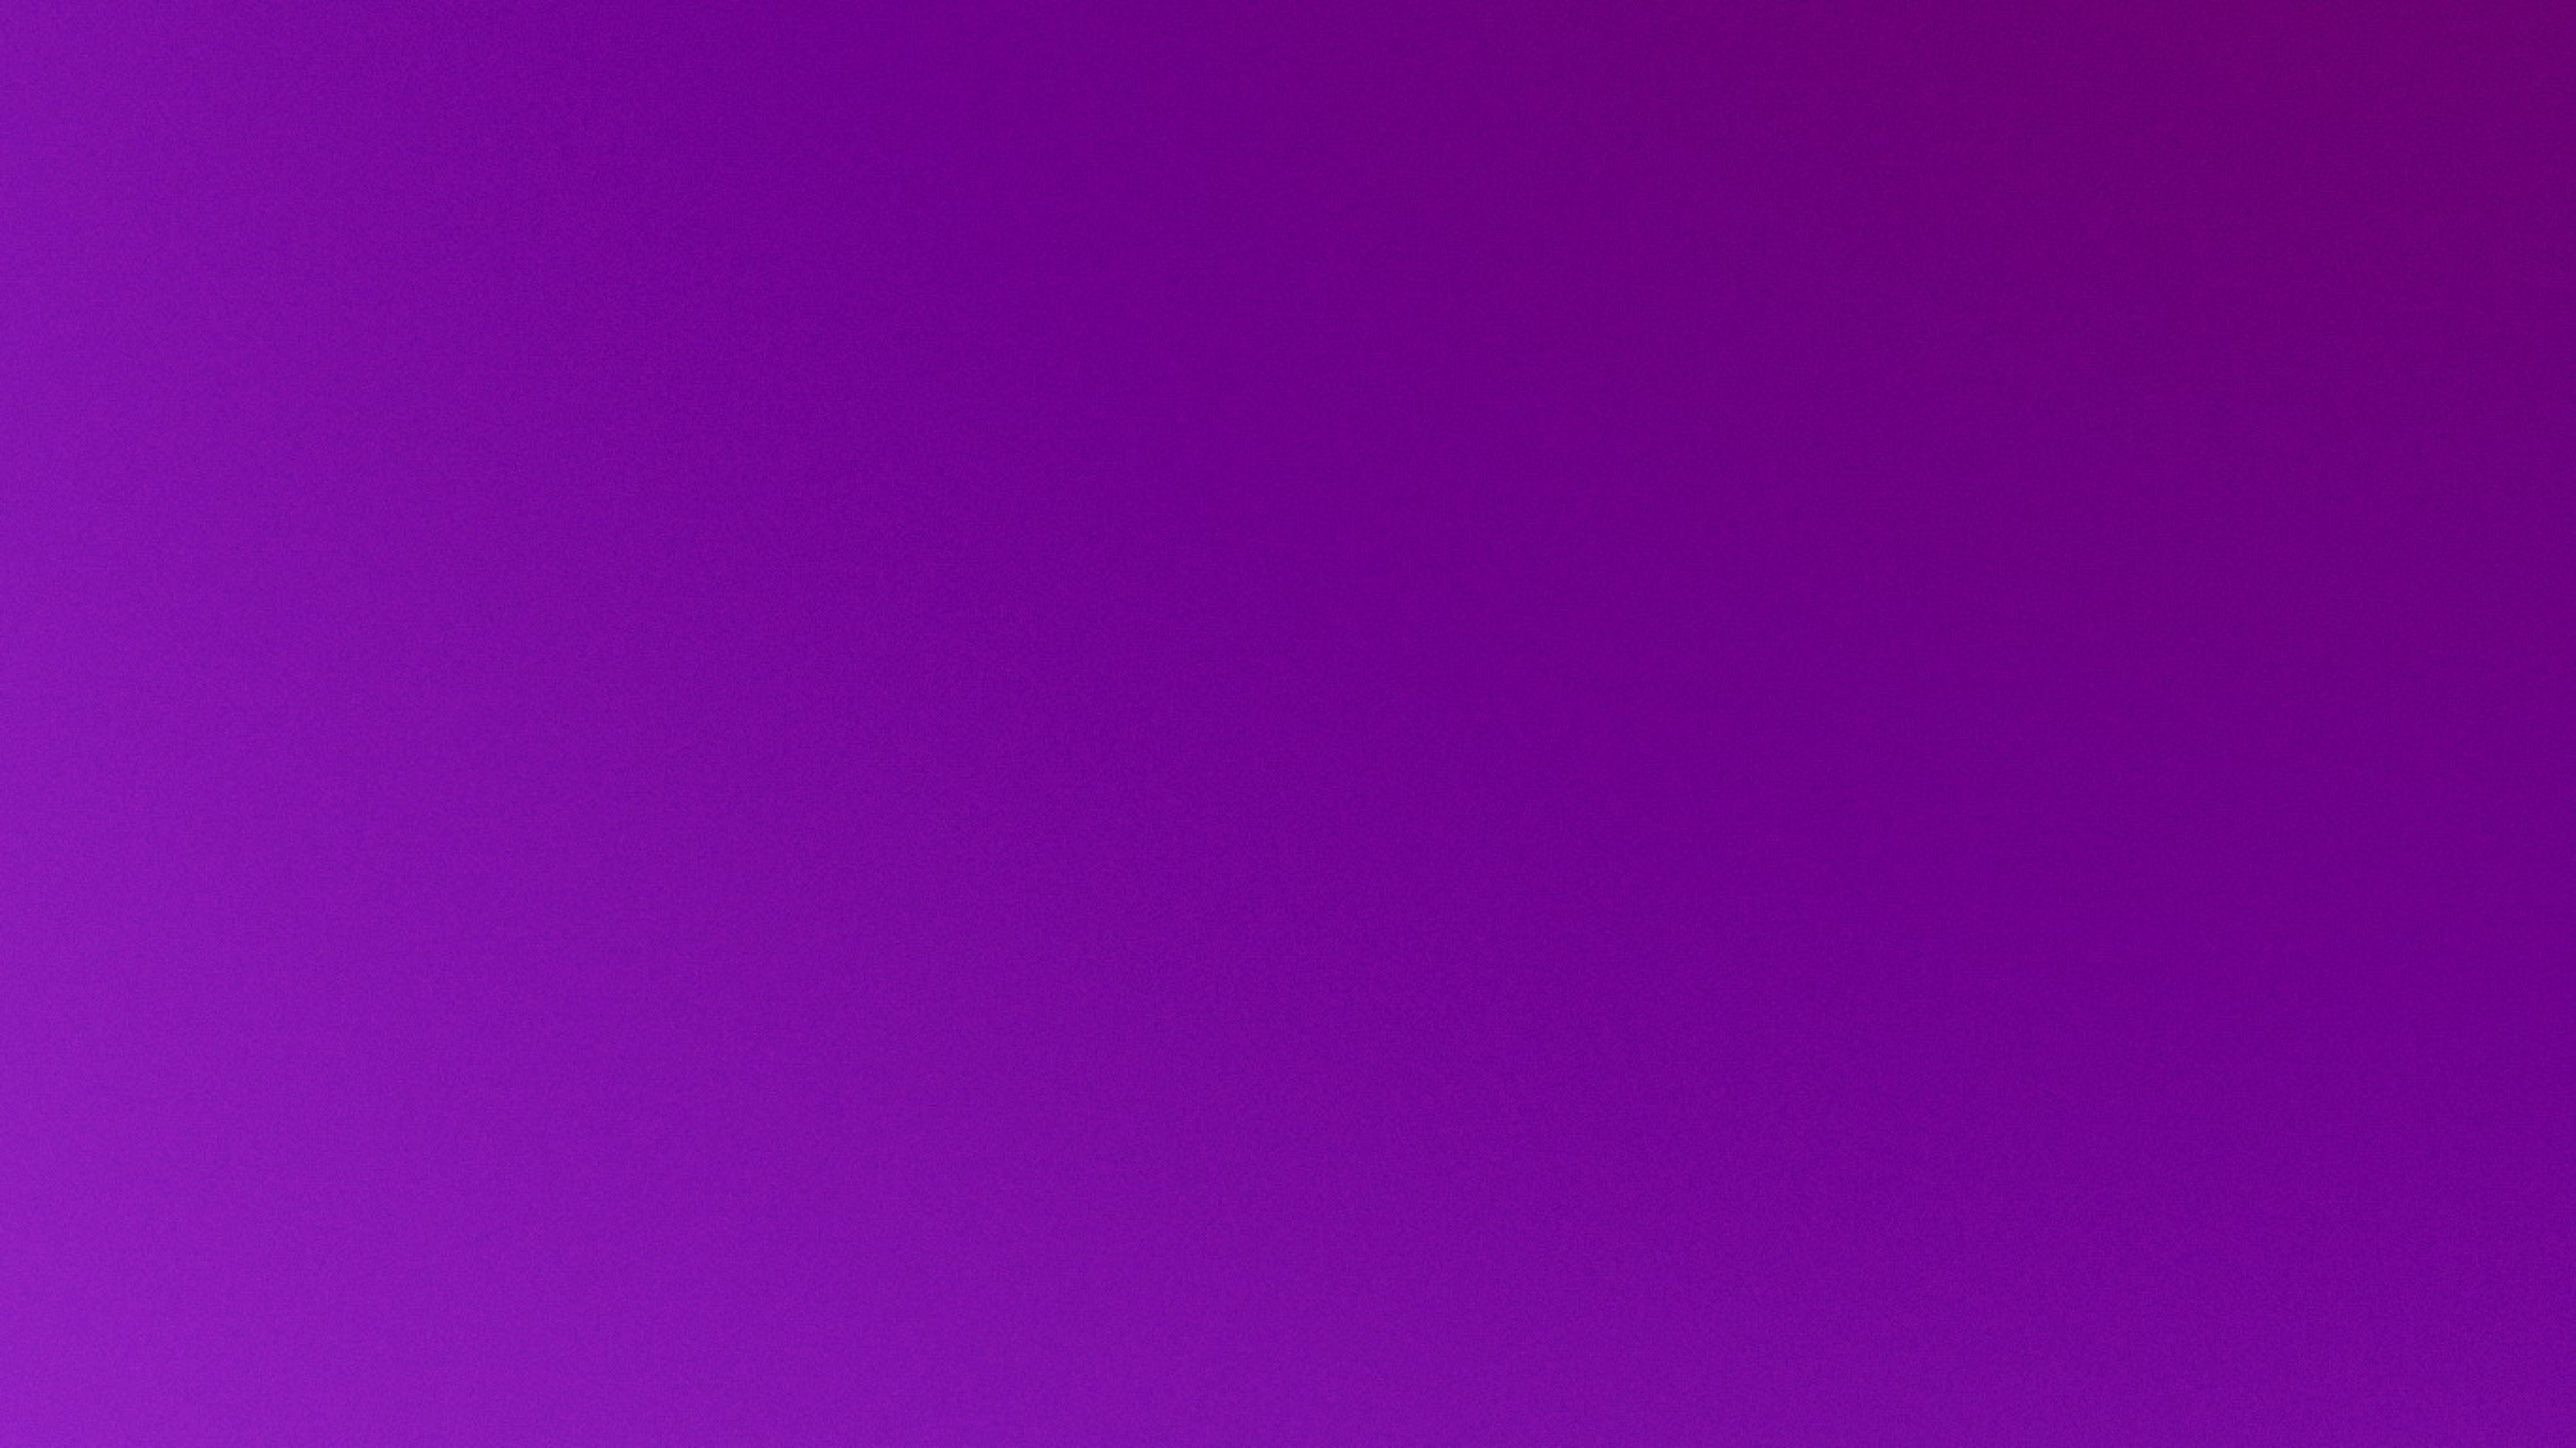 General 2880x1619 violet simple background texture